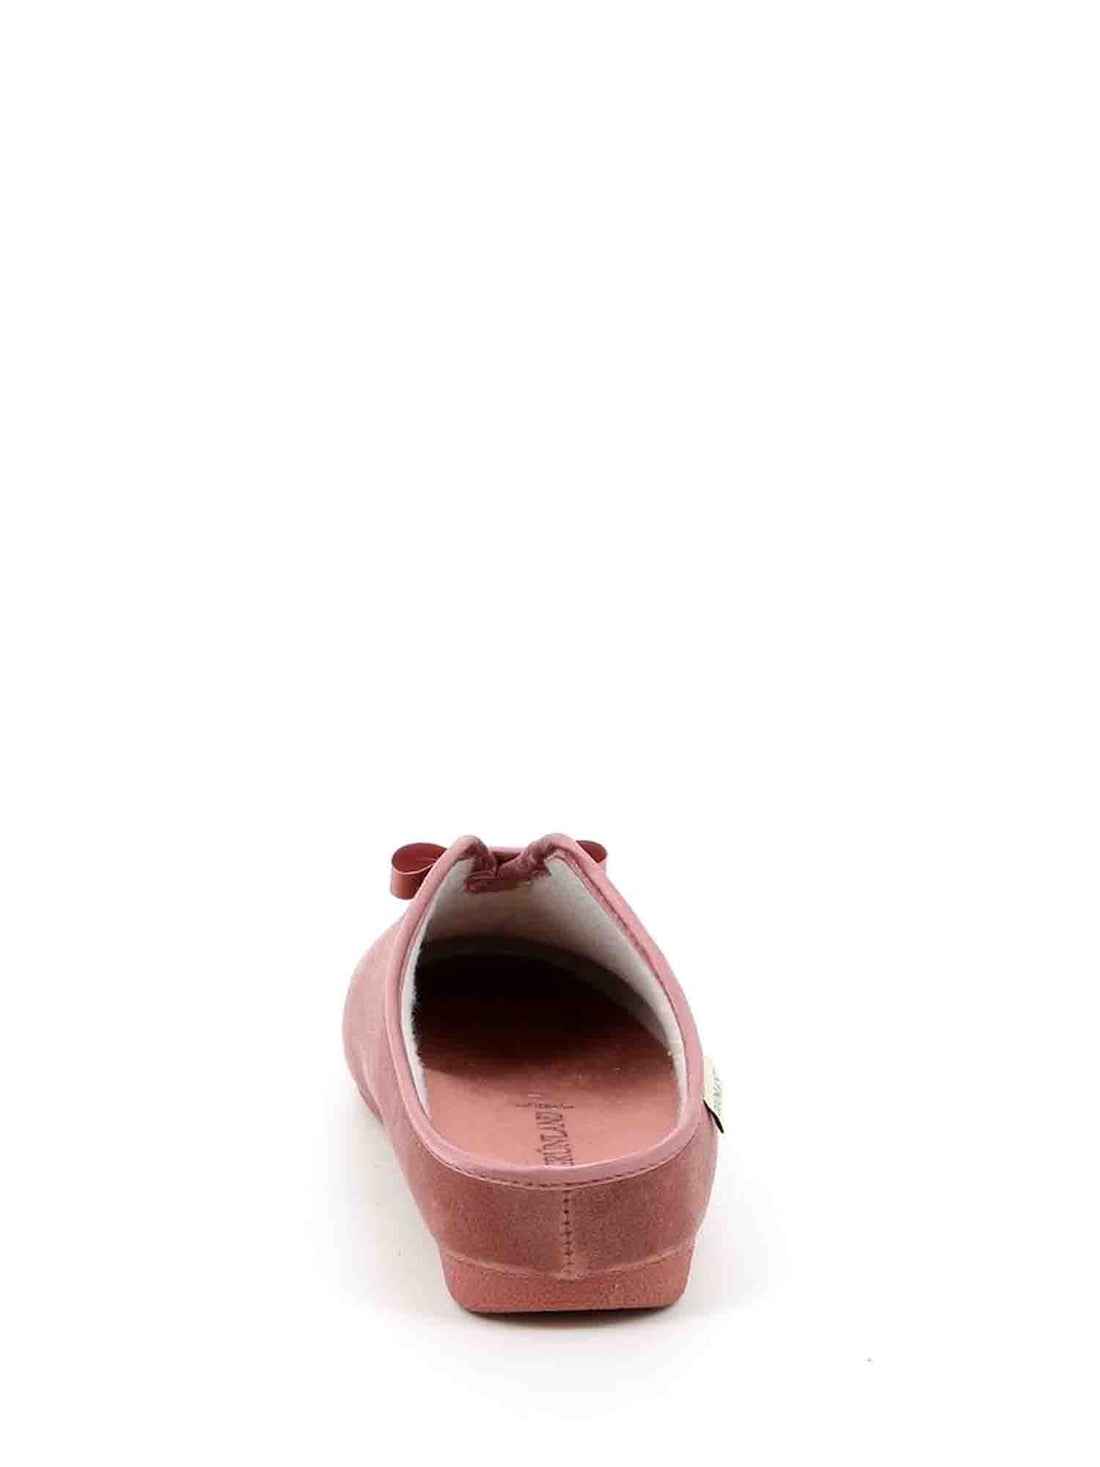 Pantofole Rosa Grunland